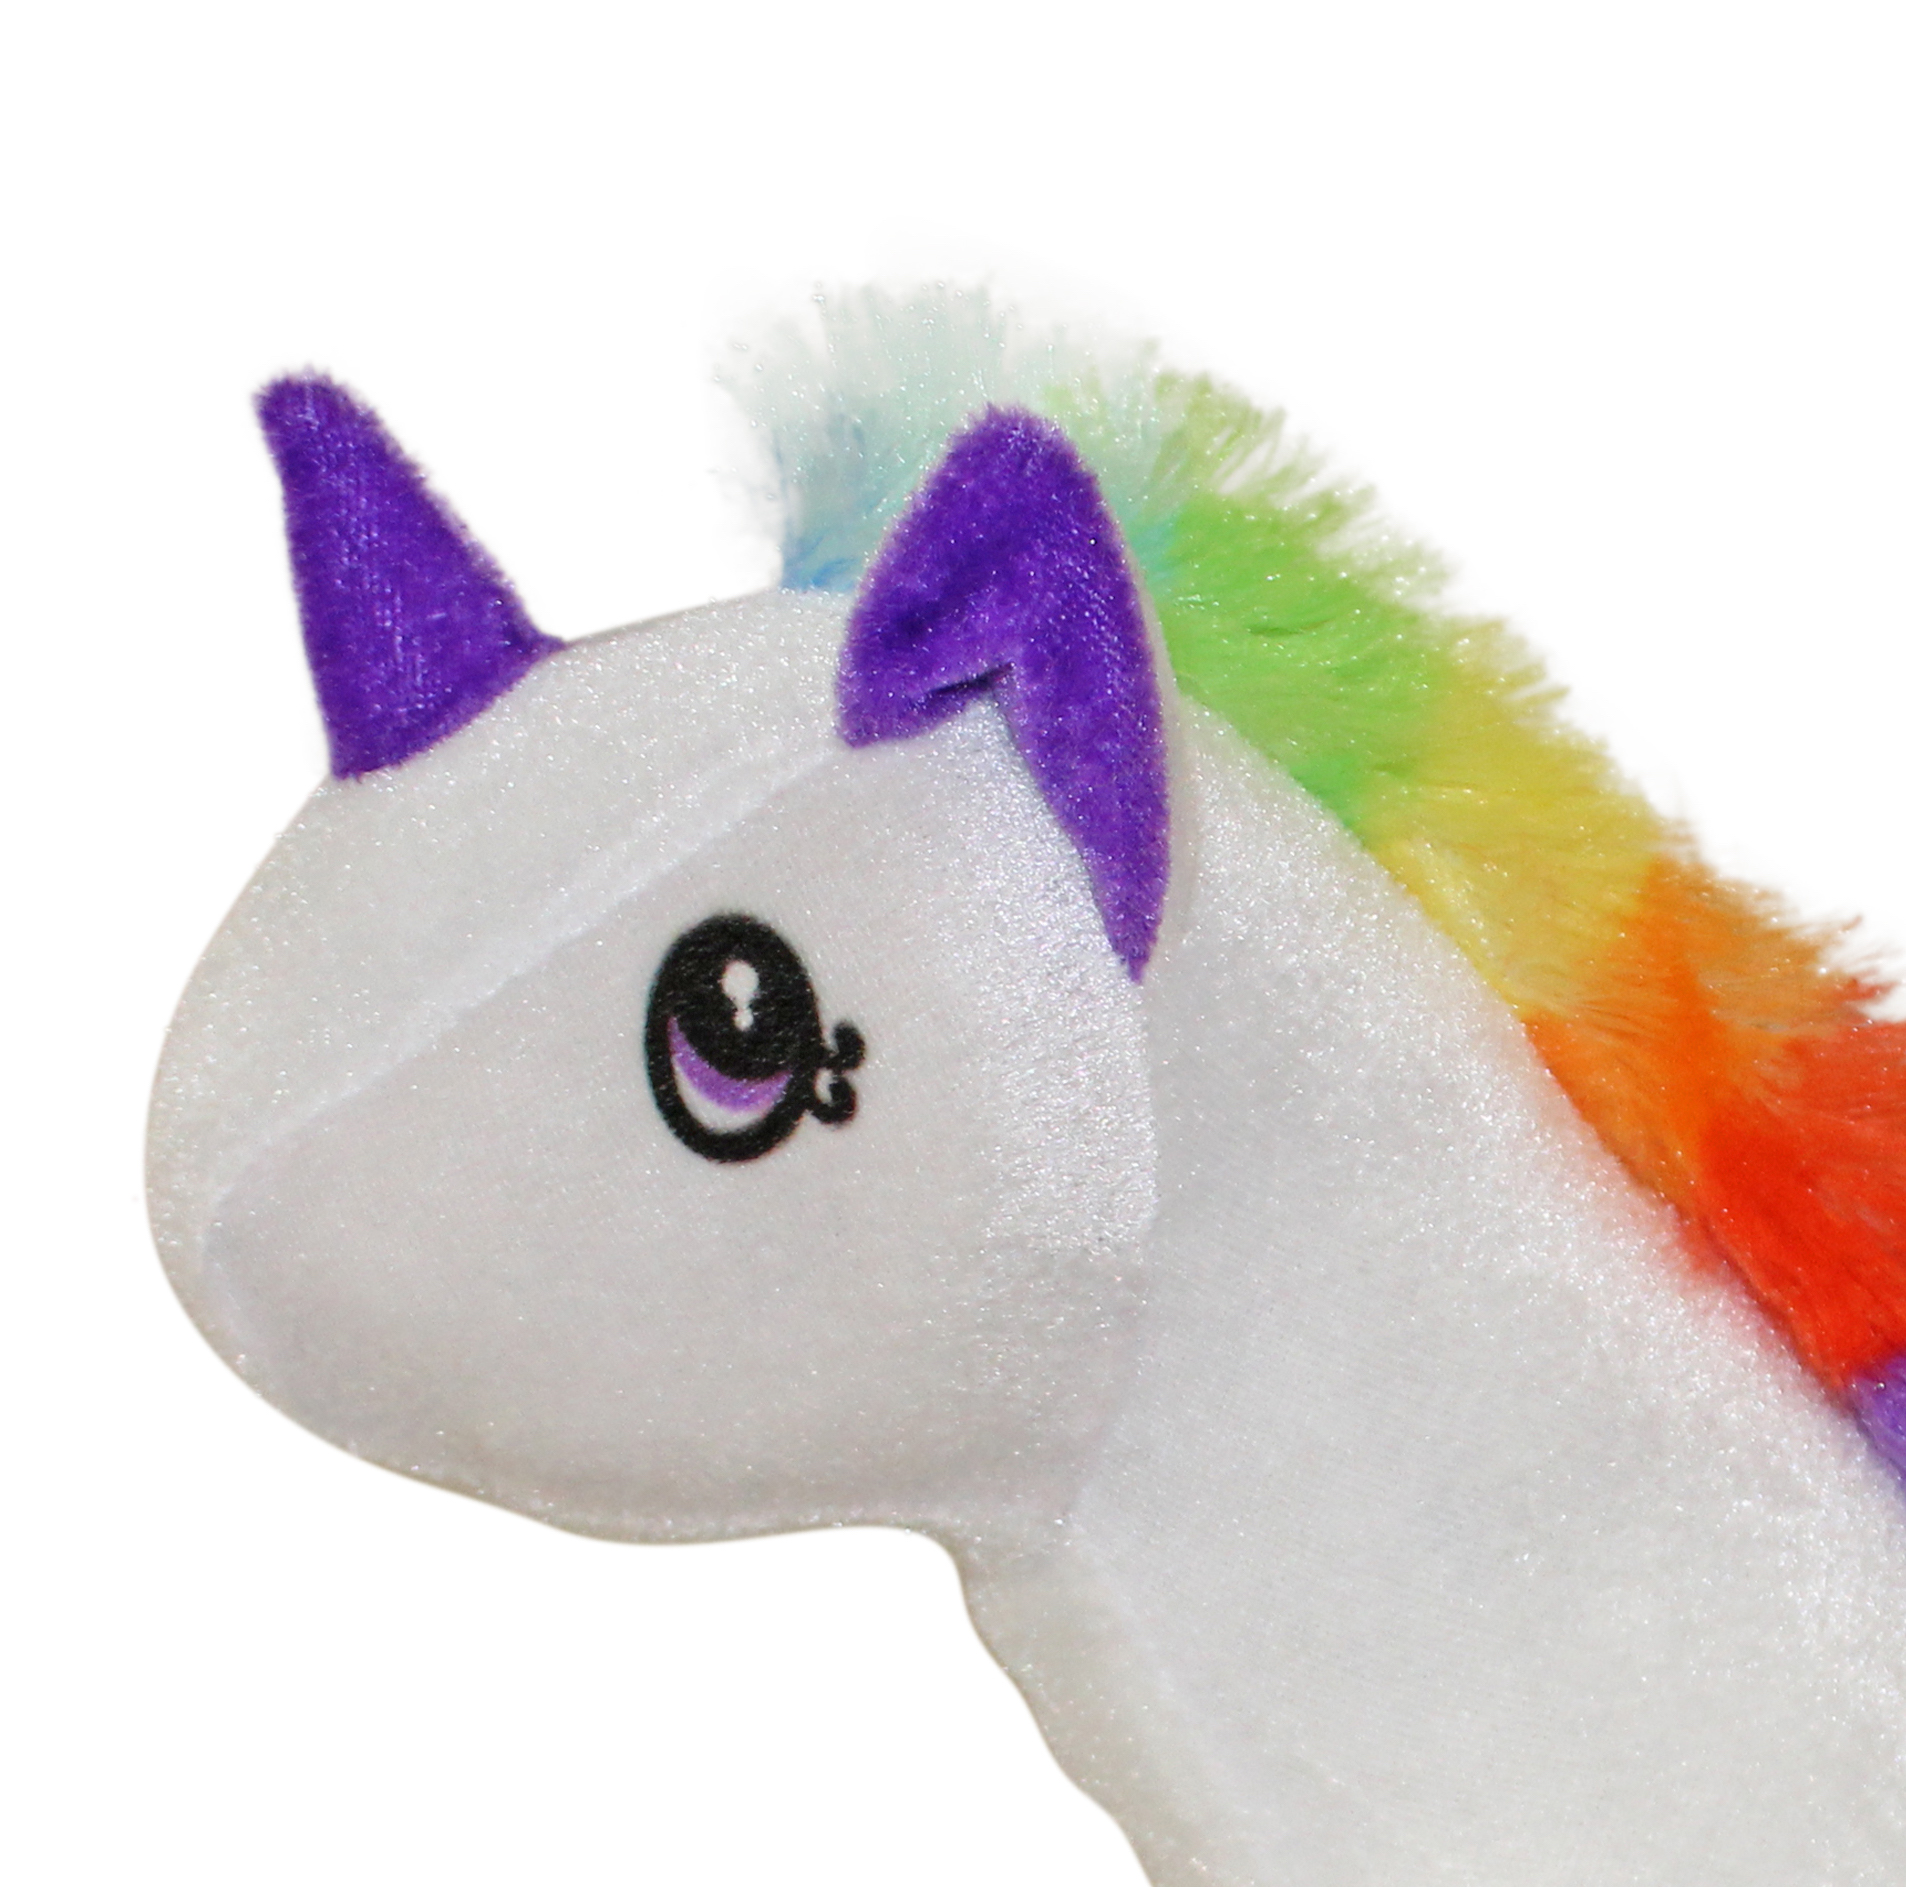 Plush Pal 12" Soft & Fluffy Purple Unicorn Stuffed Animal Toy with Rainbow Tail And Mane - image 3 of 5